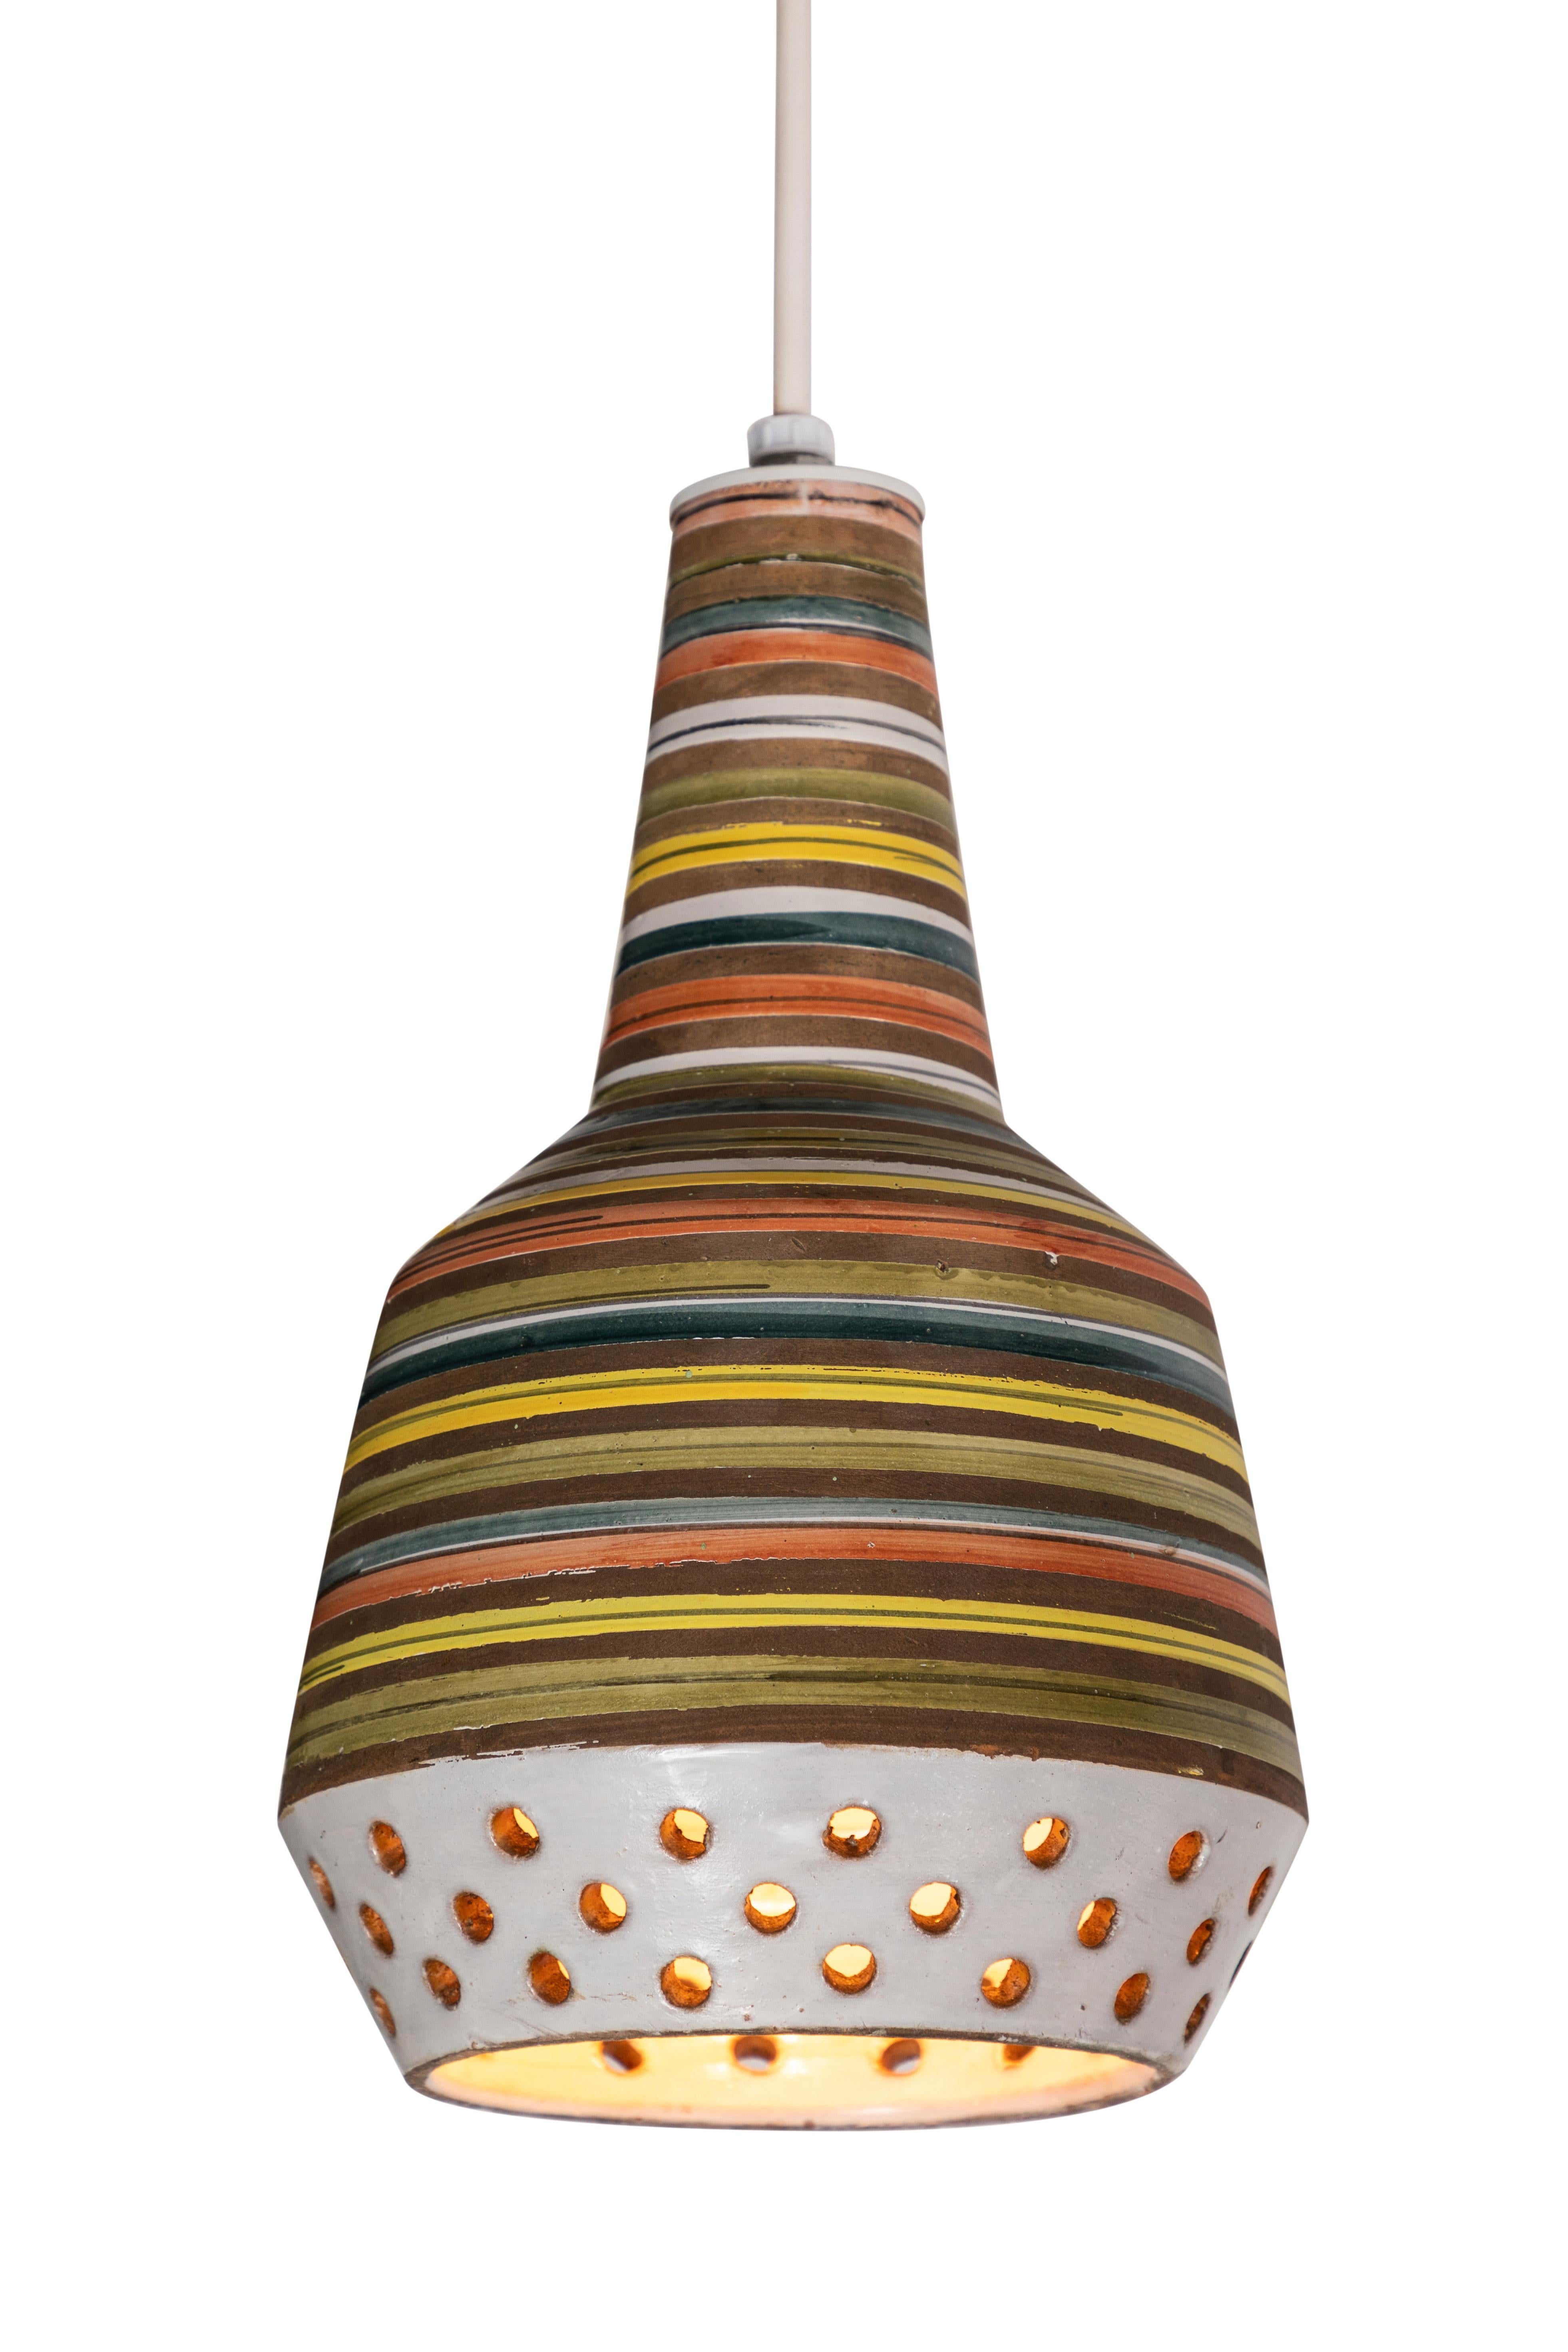 1950s Aldo Londi Ceramic Bitossi Pendant Lamp for Italian Raymor 1